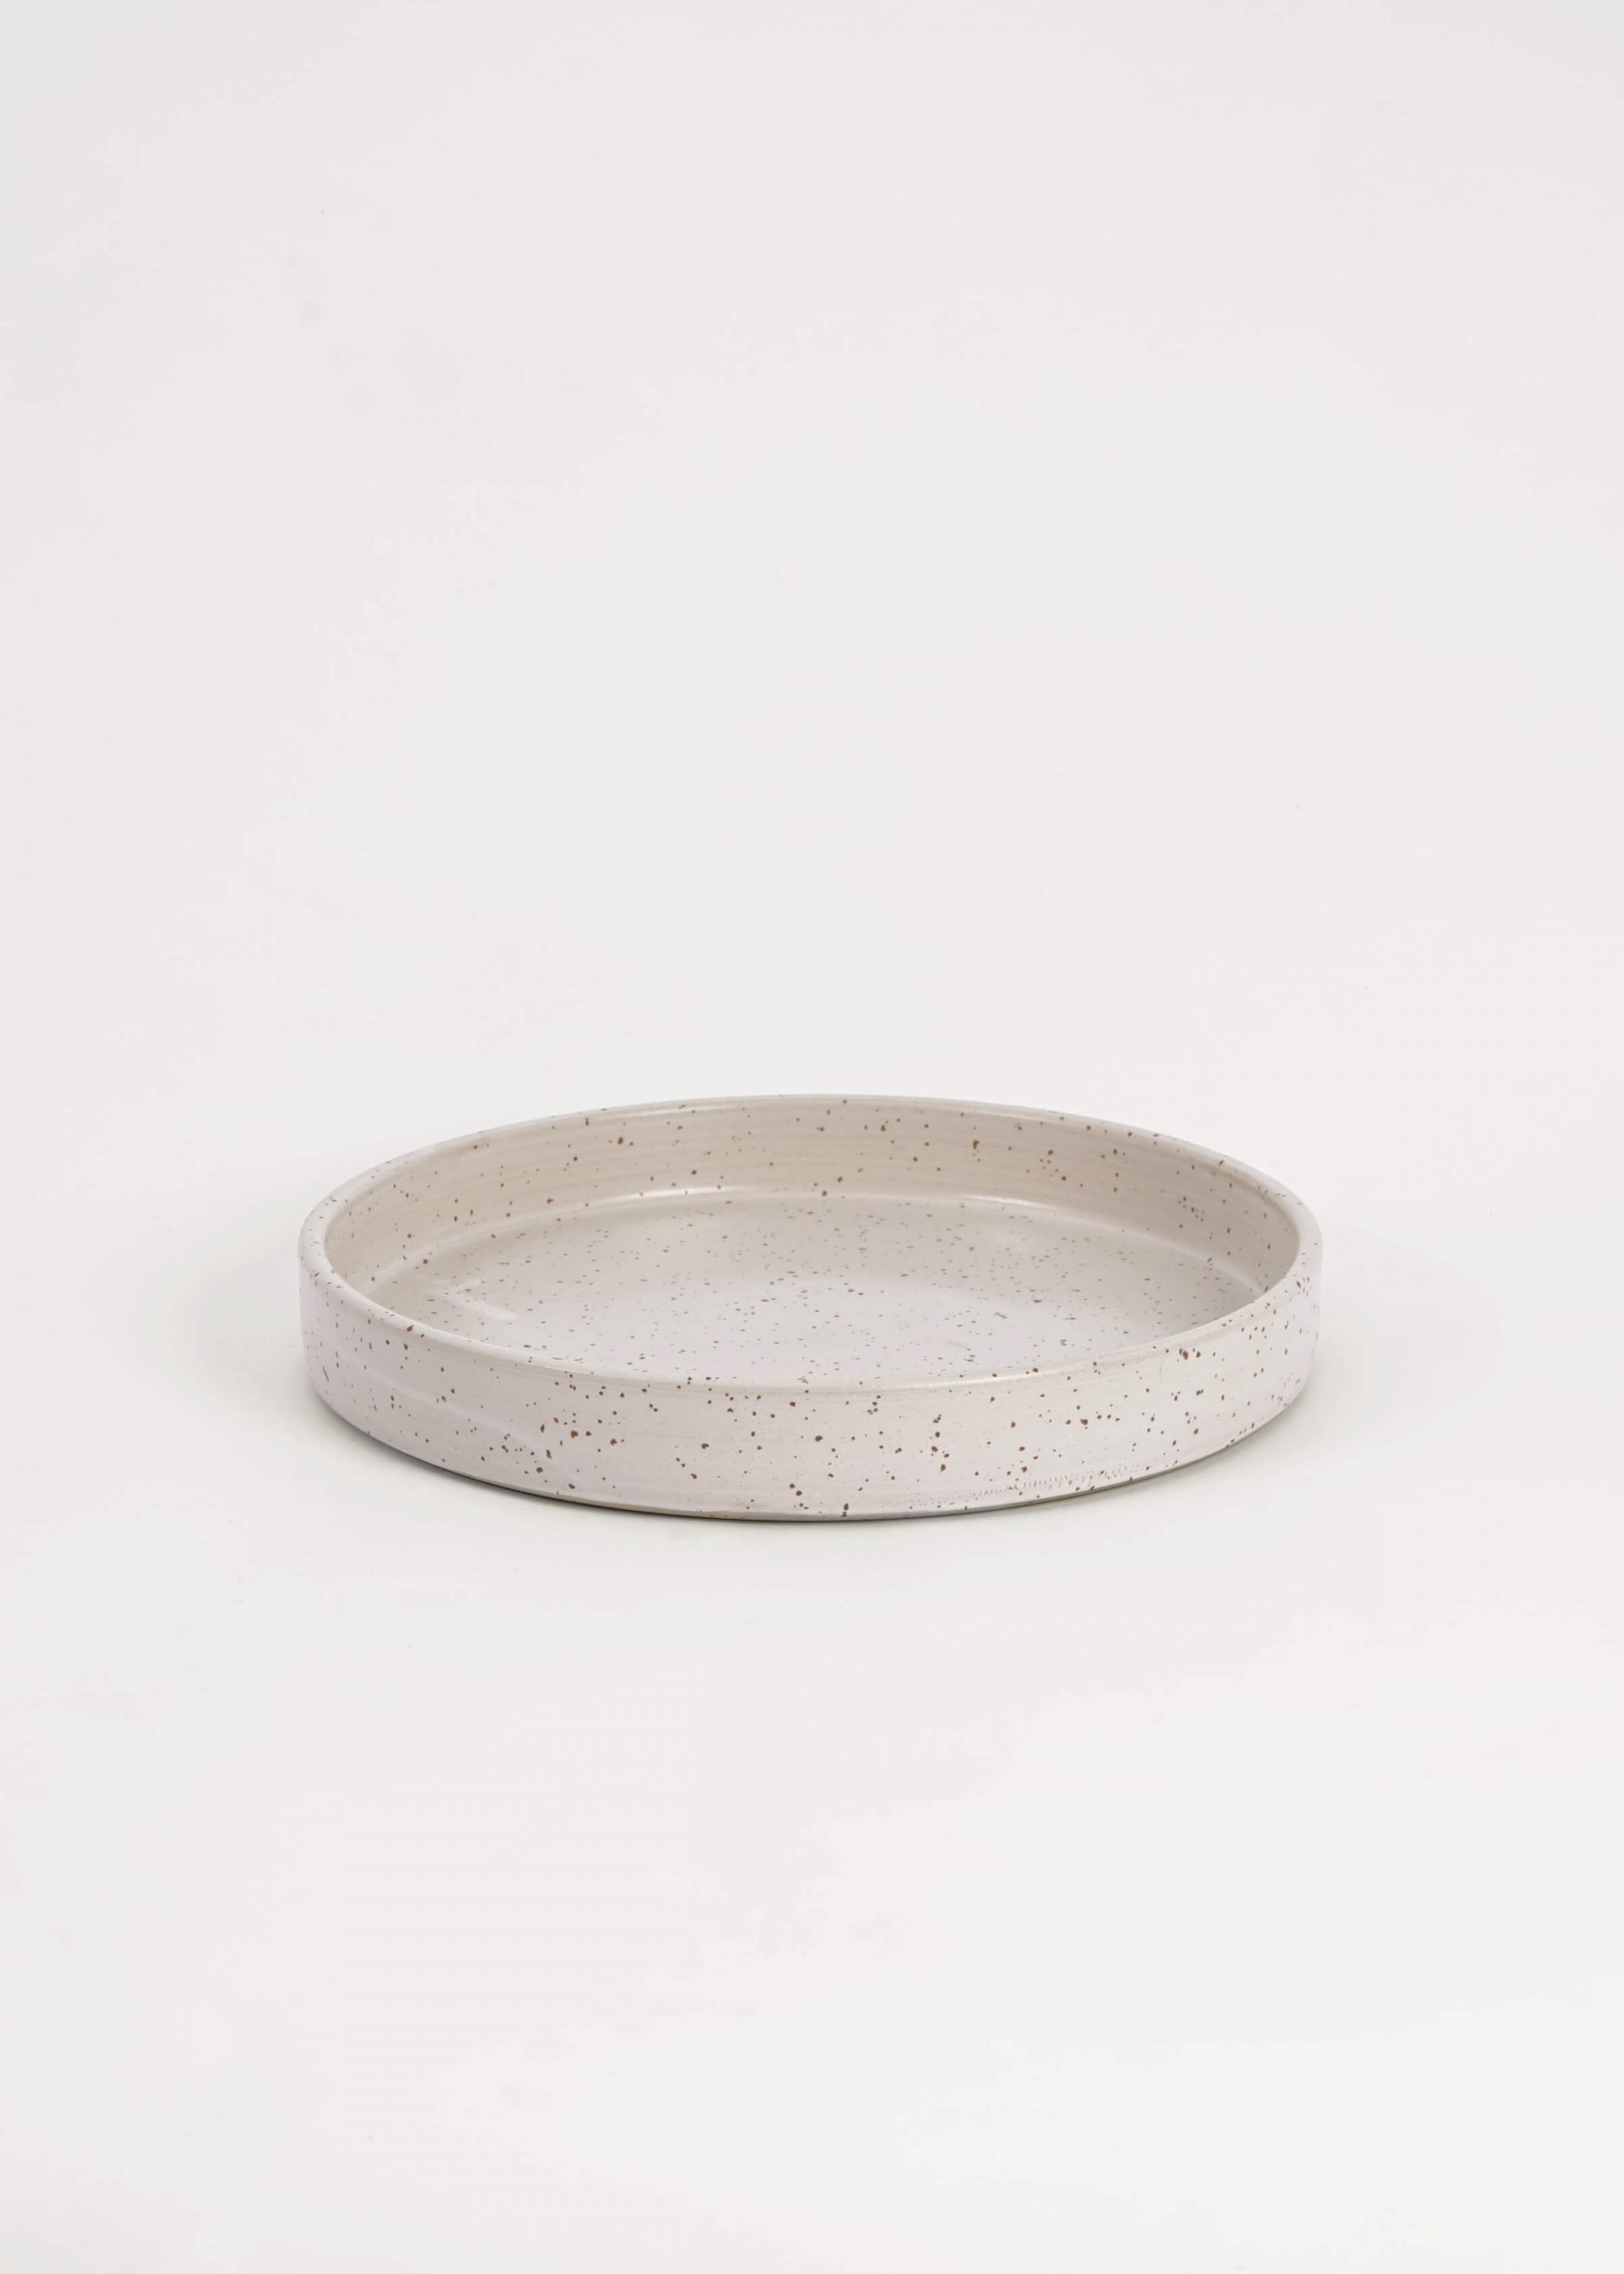 Product image for »Geodesic White« Large Tray Plate Ménage | Genuine Stoneware Ceramic